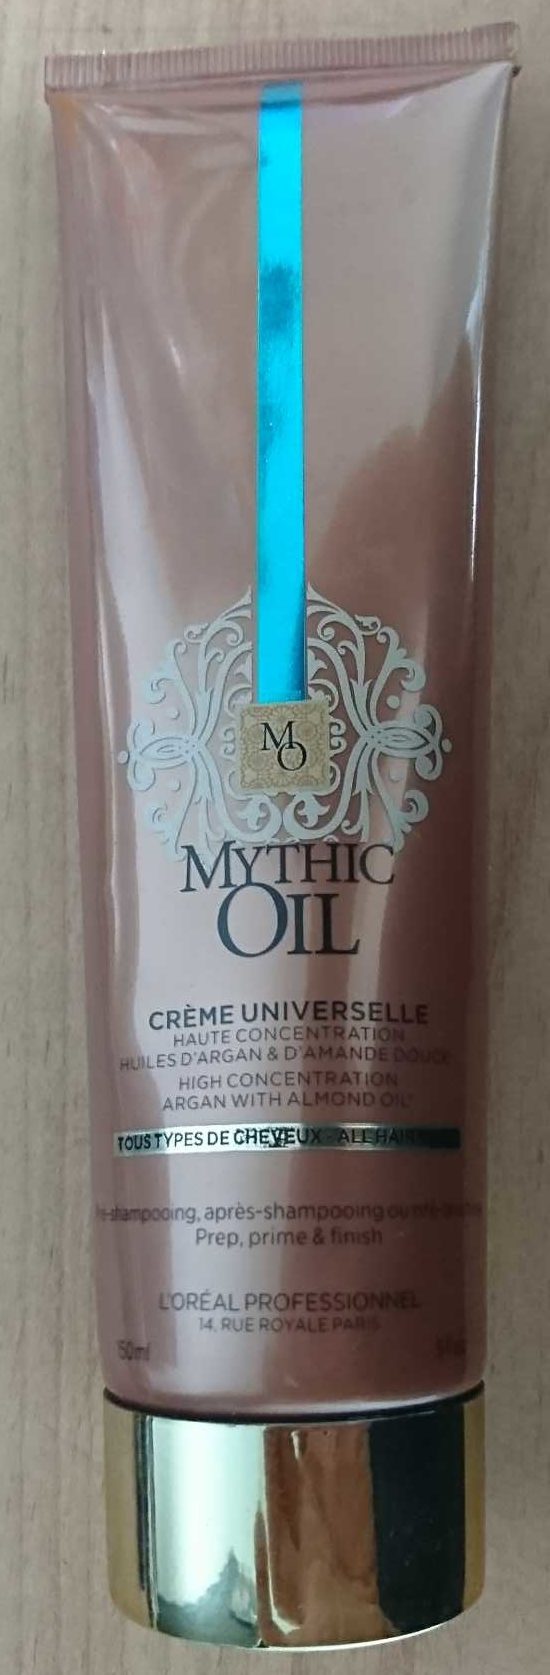 Mythic oil - Product - fr